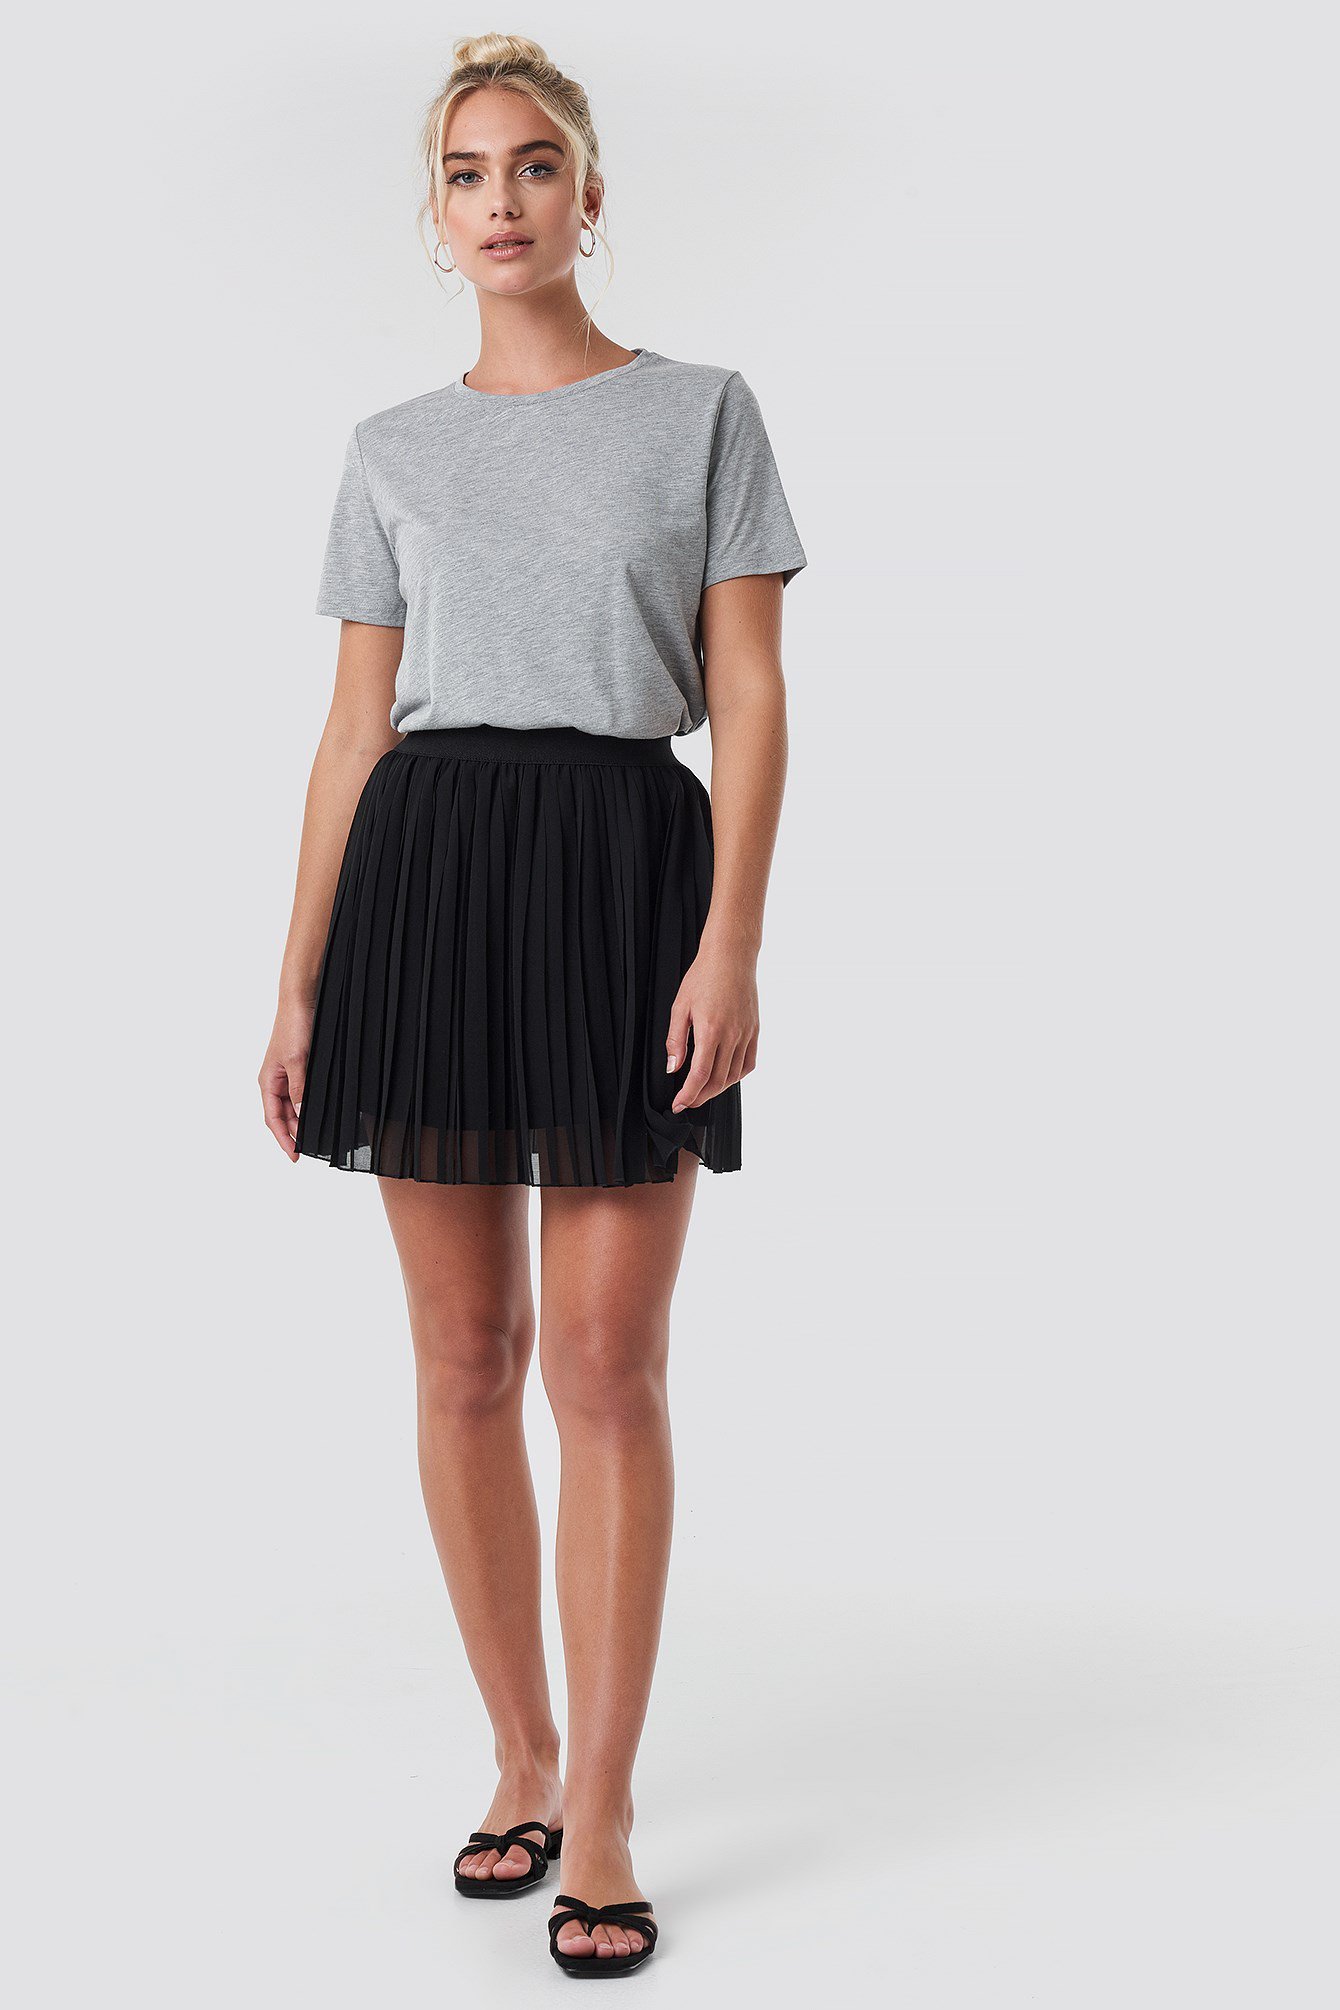 Black Mini Pleated Skirt Outfit